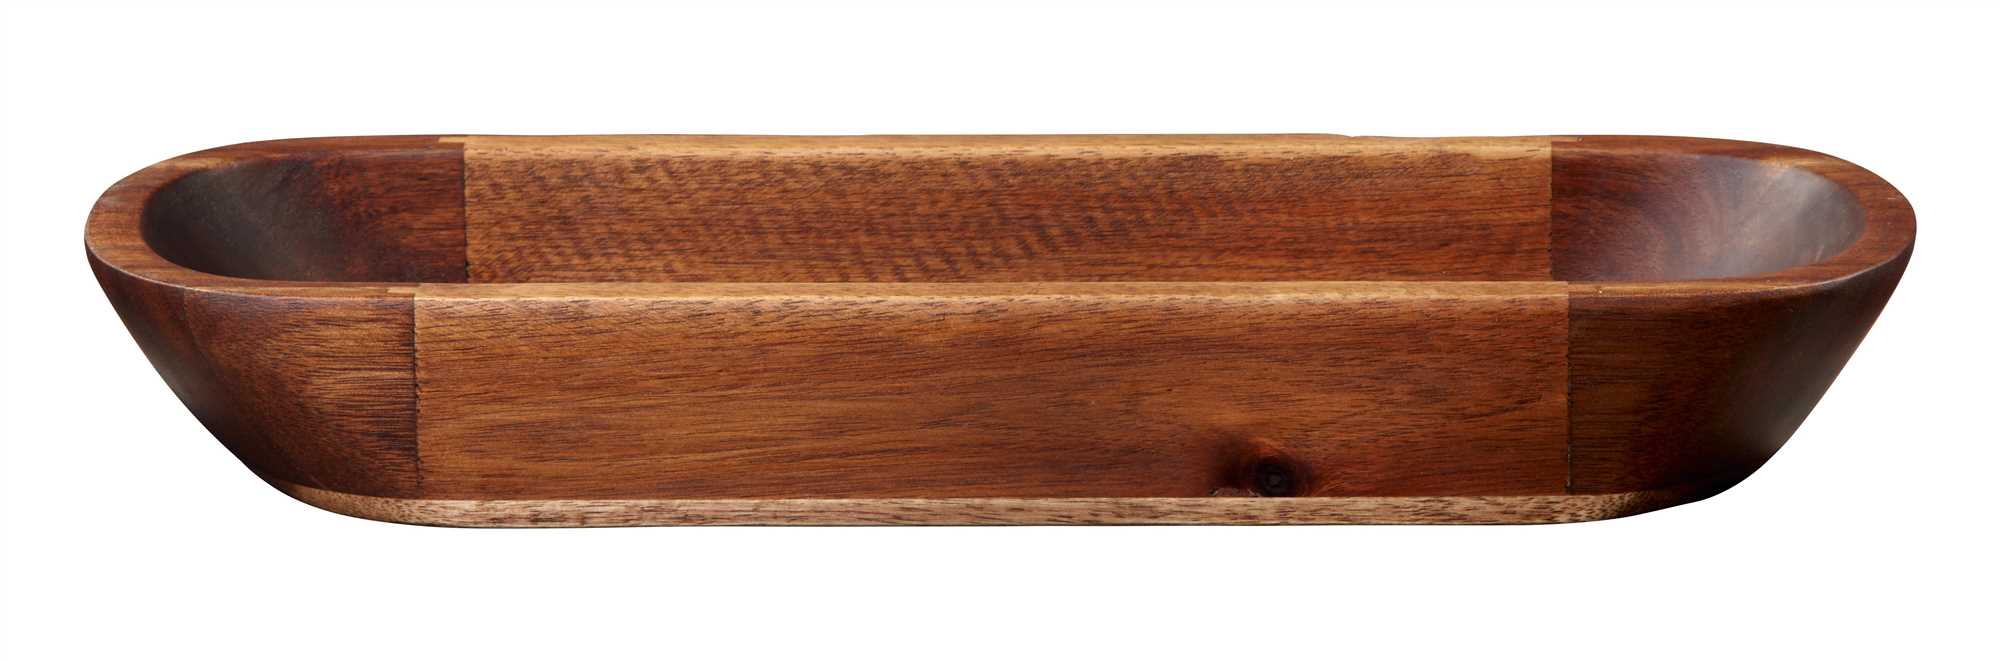 ASA Selection Wood ovale Schale, akazie massiv 38 x 10,5 cm , h. 4,7